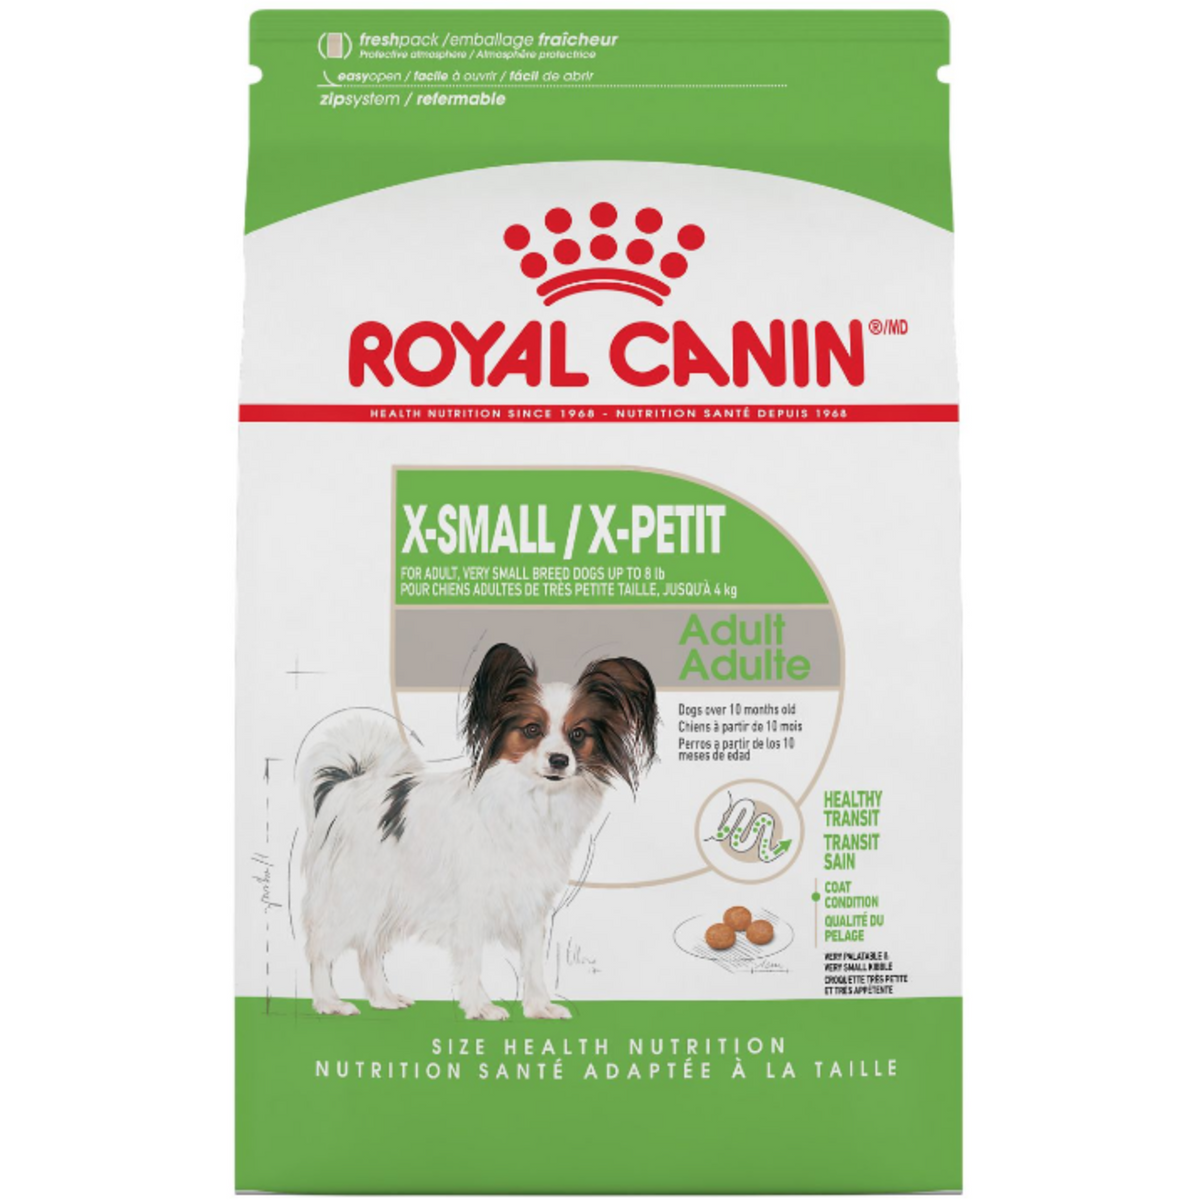 Royal Canin X-SMALL Adult Dog Food